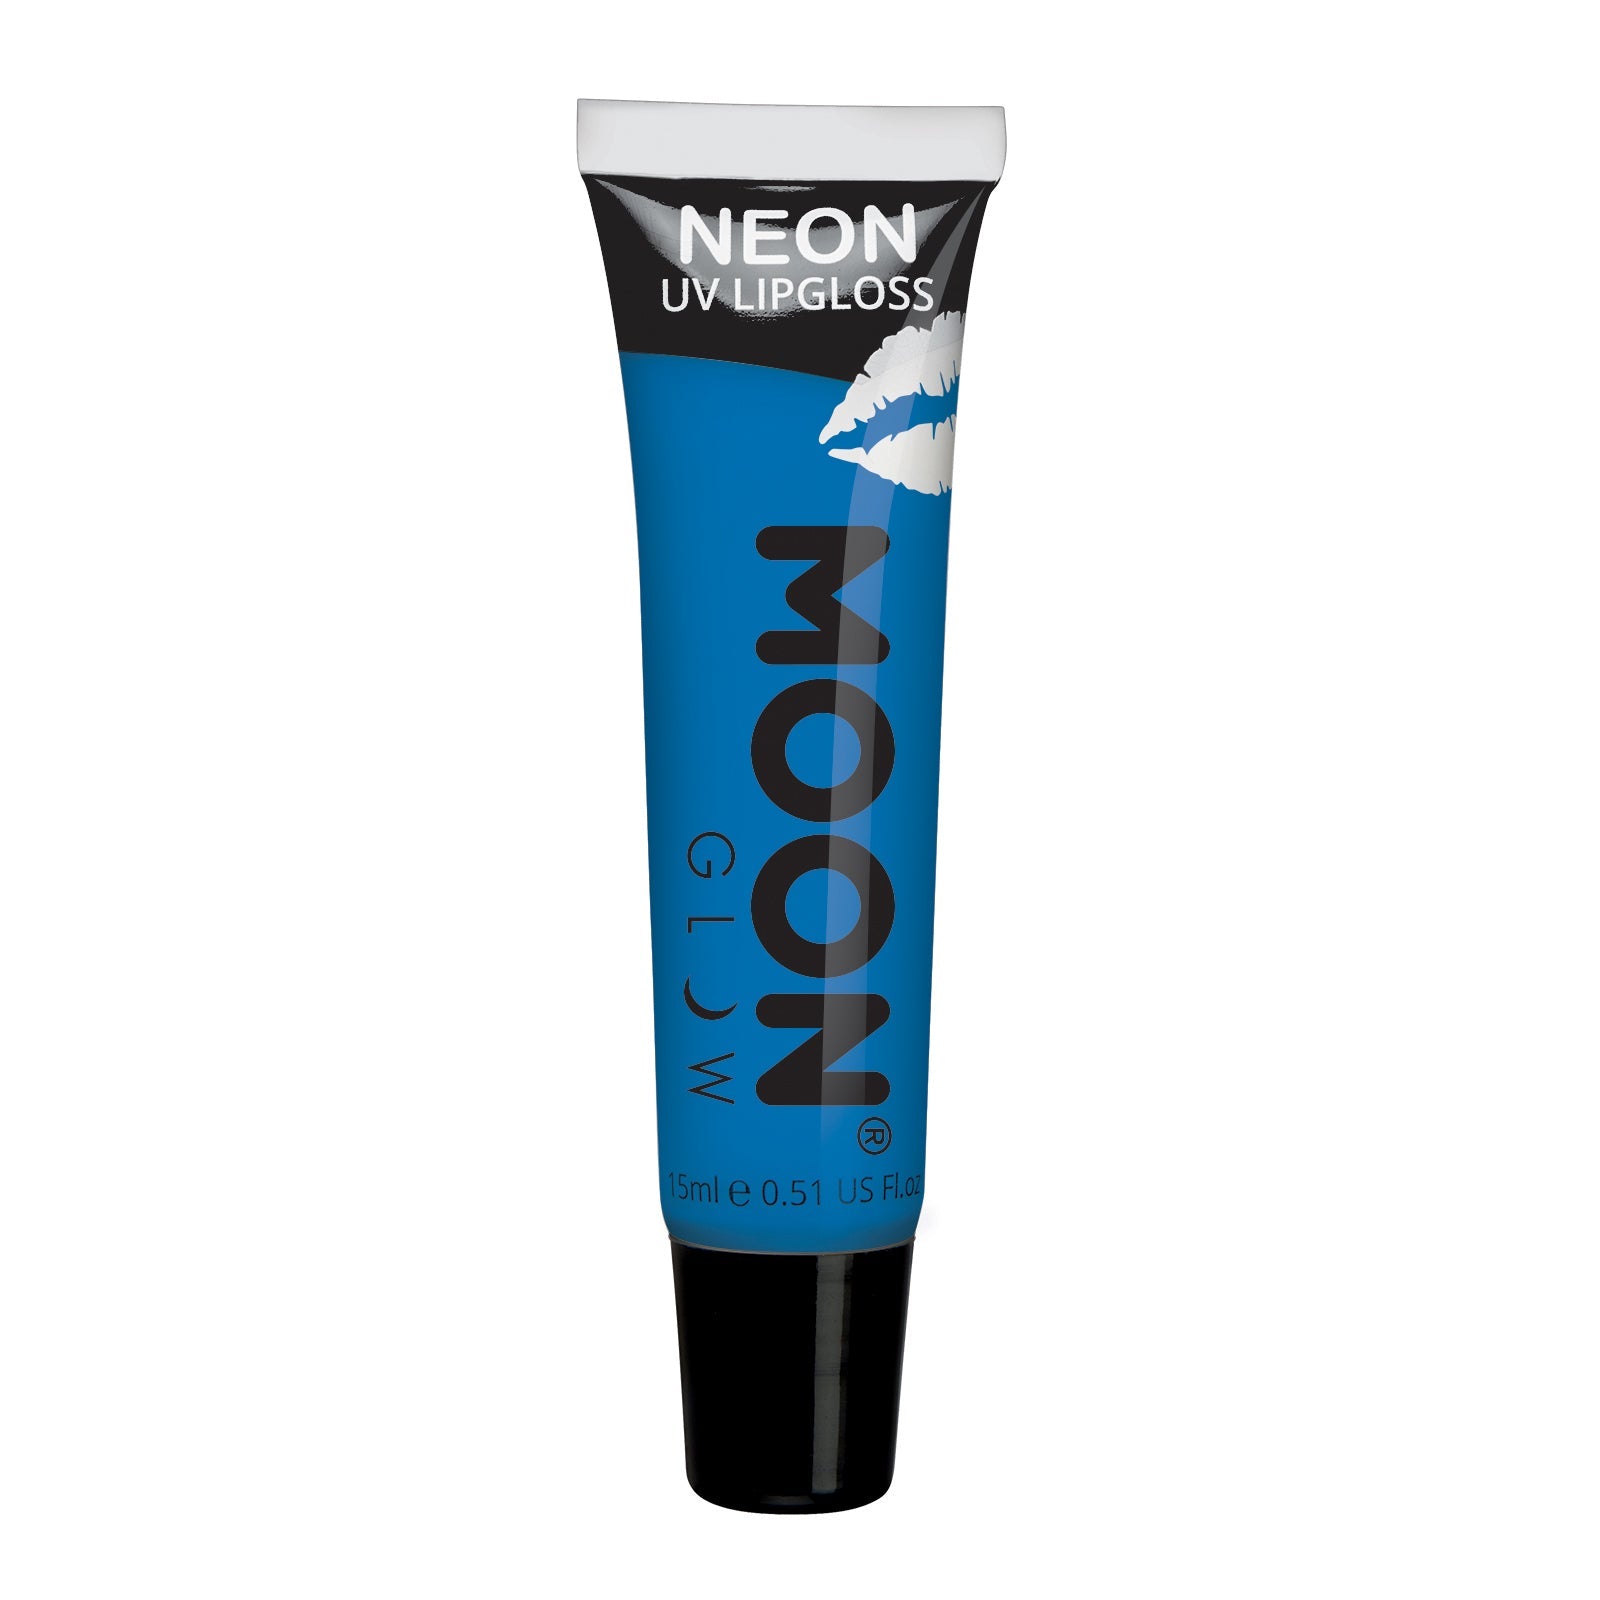 Intense Blue Bubblegum - Neon UV Glow Blacklight Lip Gloss, 15mL. Cosmetically certified, FDA & Health Canada compliant, cruelty free and vegan.